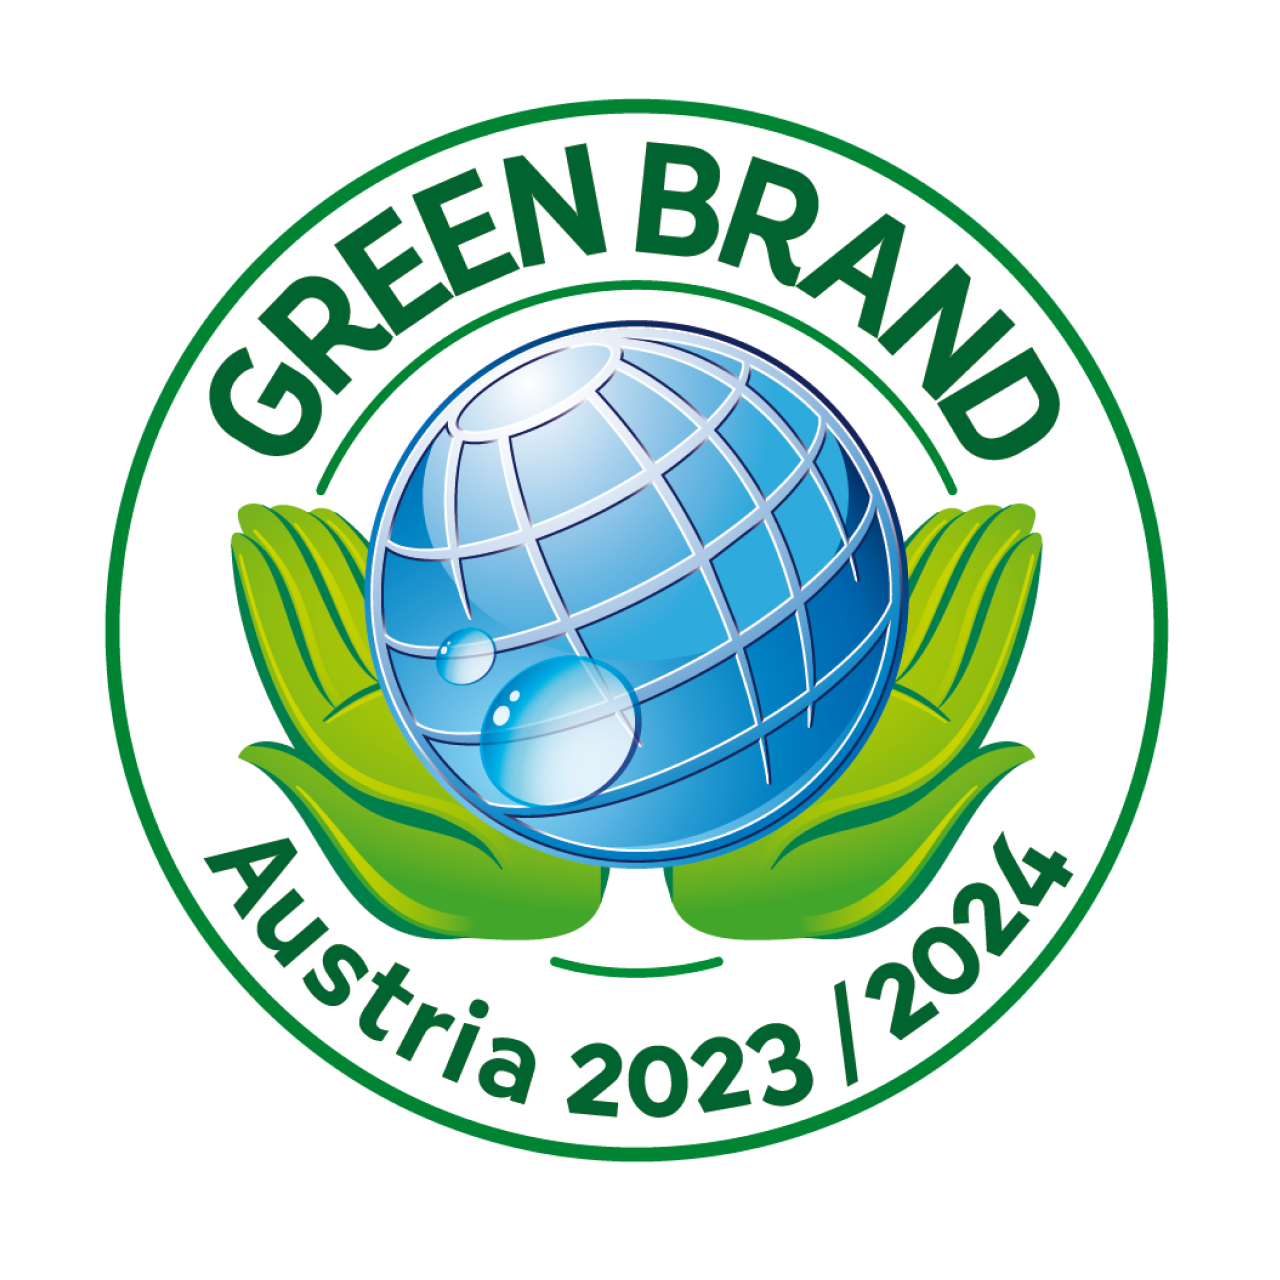 Green Brand Austria 2023